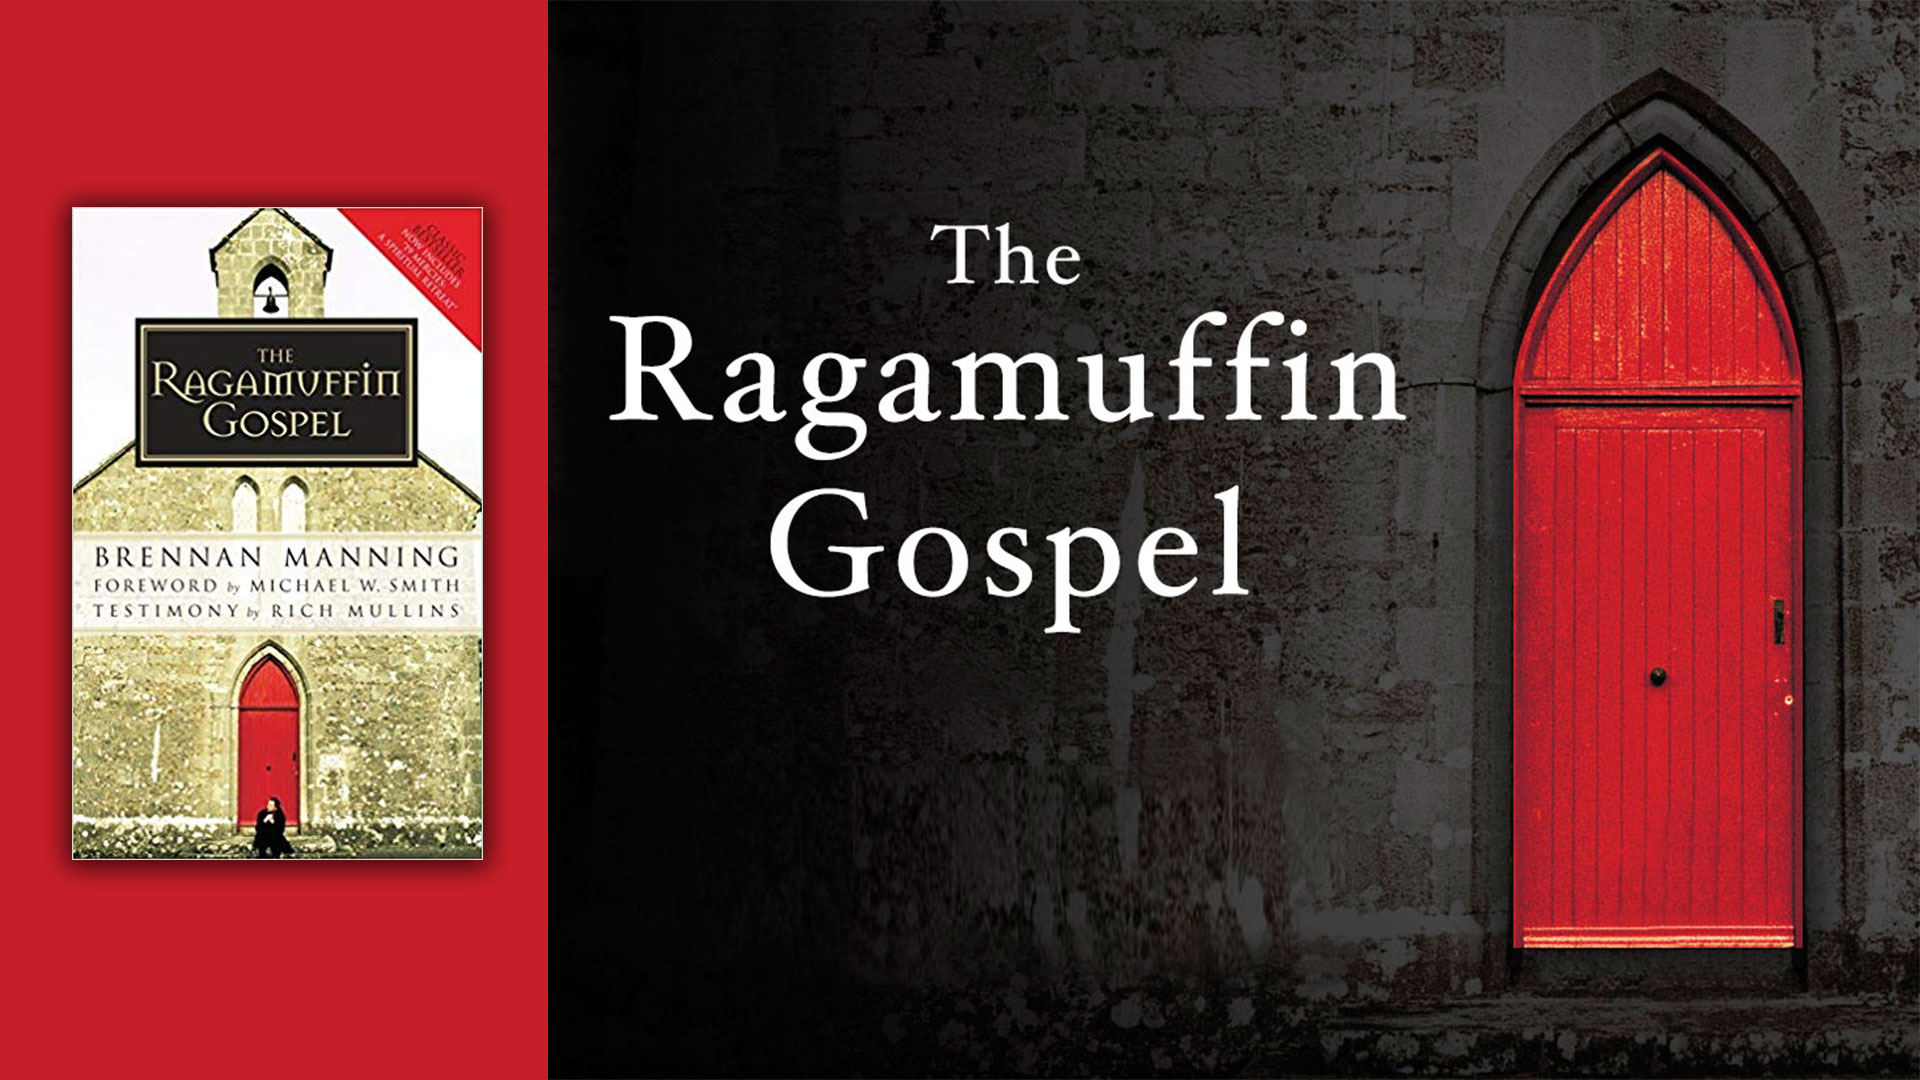 The Ragamuffin Gospel, by Brennan Manning